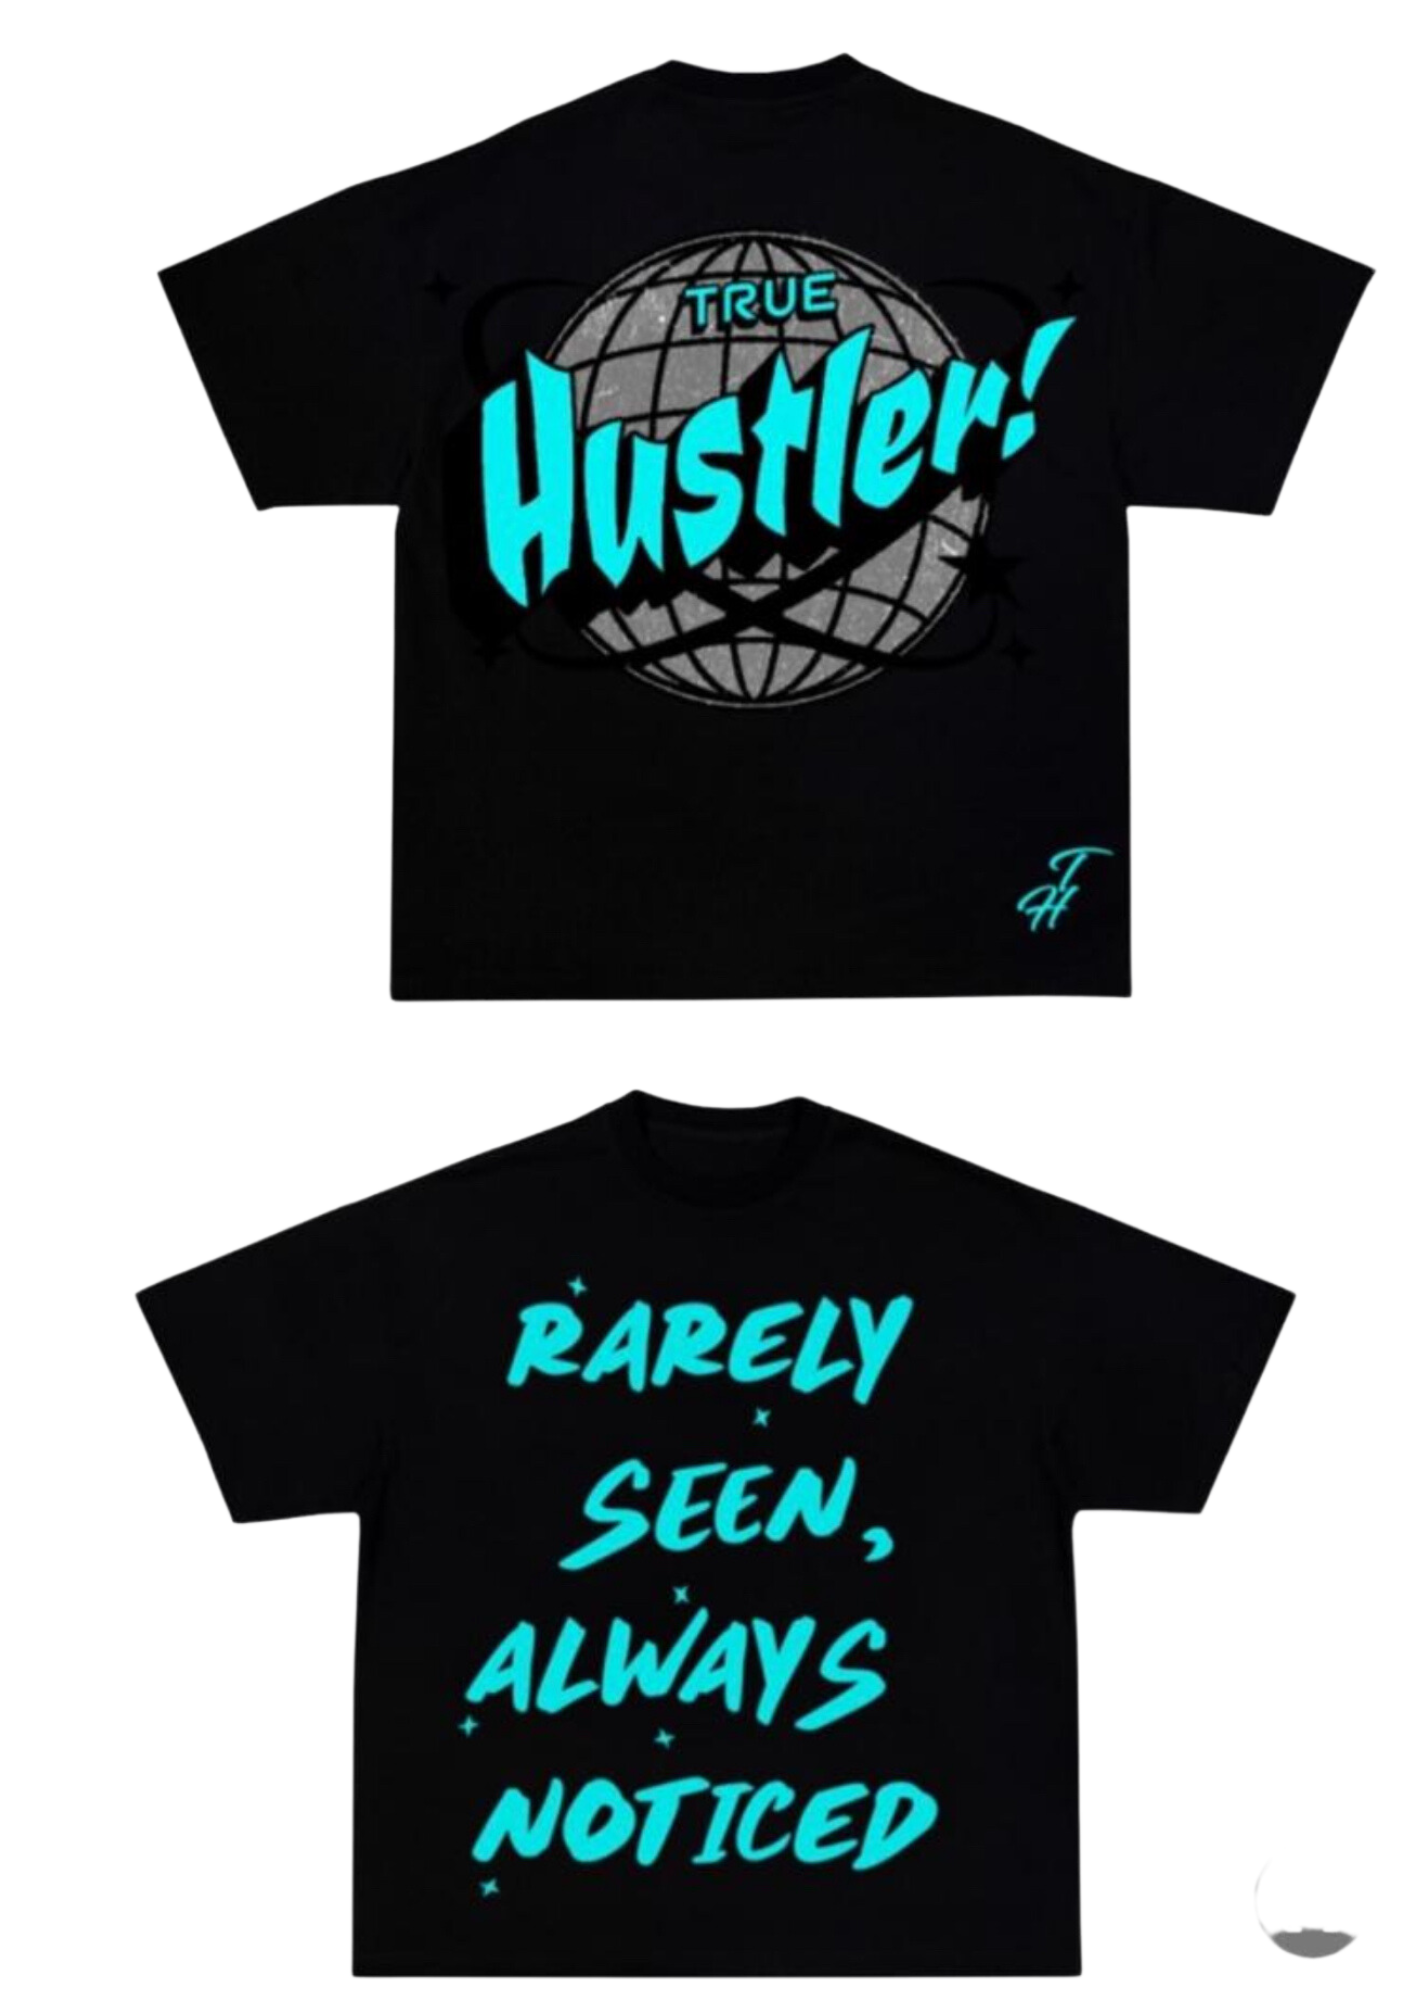 True Hustler (Teal Globe) Shirt